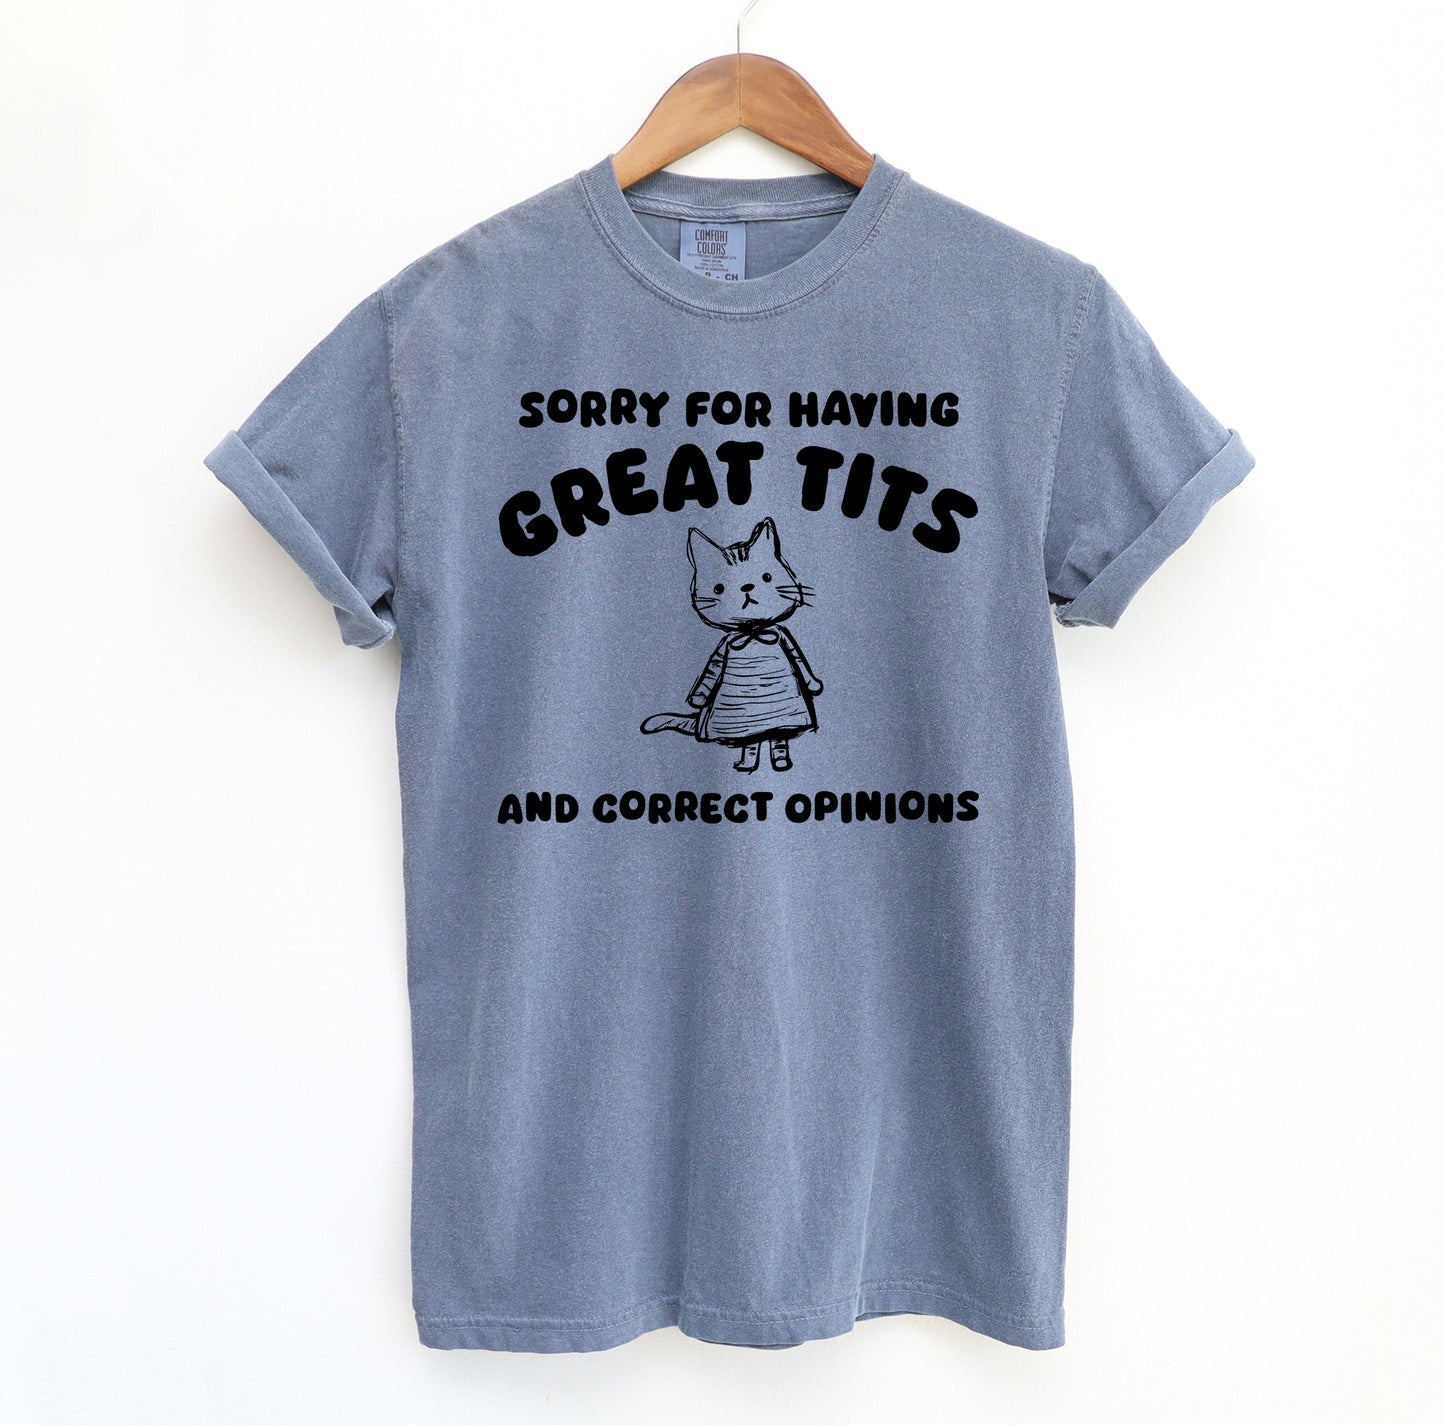 Correct Opinions T-Shirt